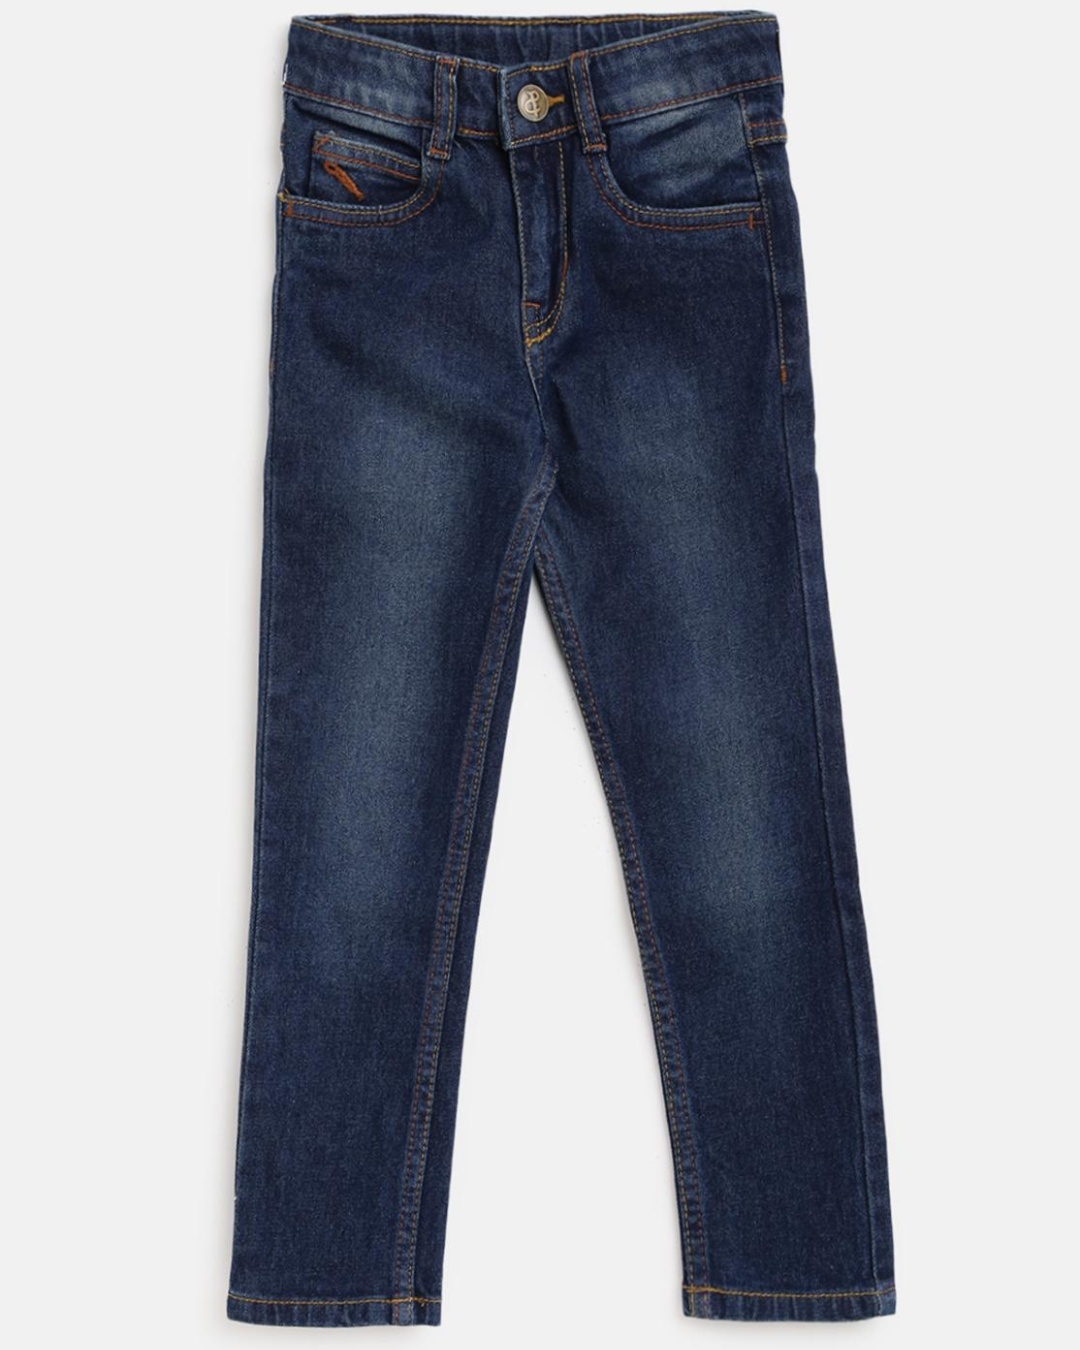 Buy Boys Blue Washed Slim Fit Jeans for Kids - Boys Blue Online at Bewakoof